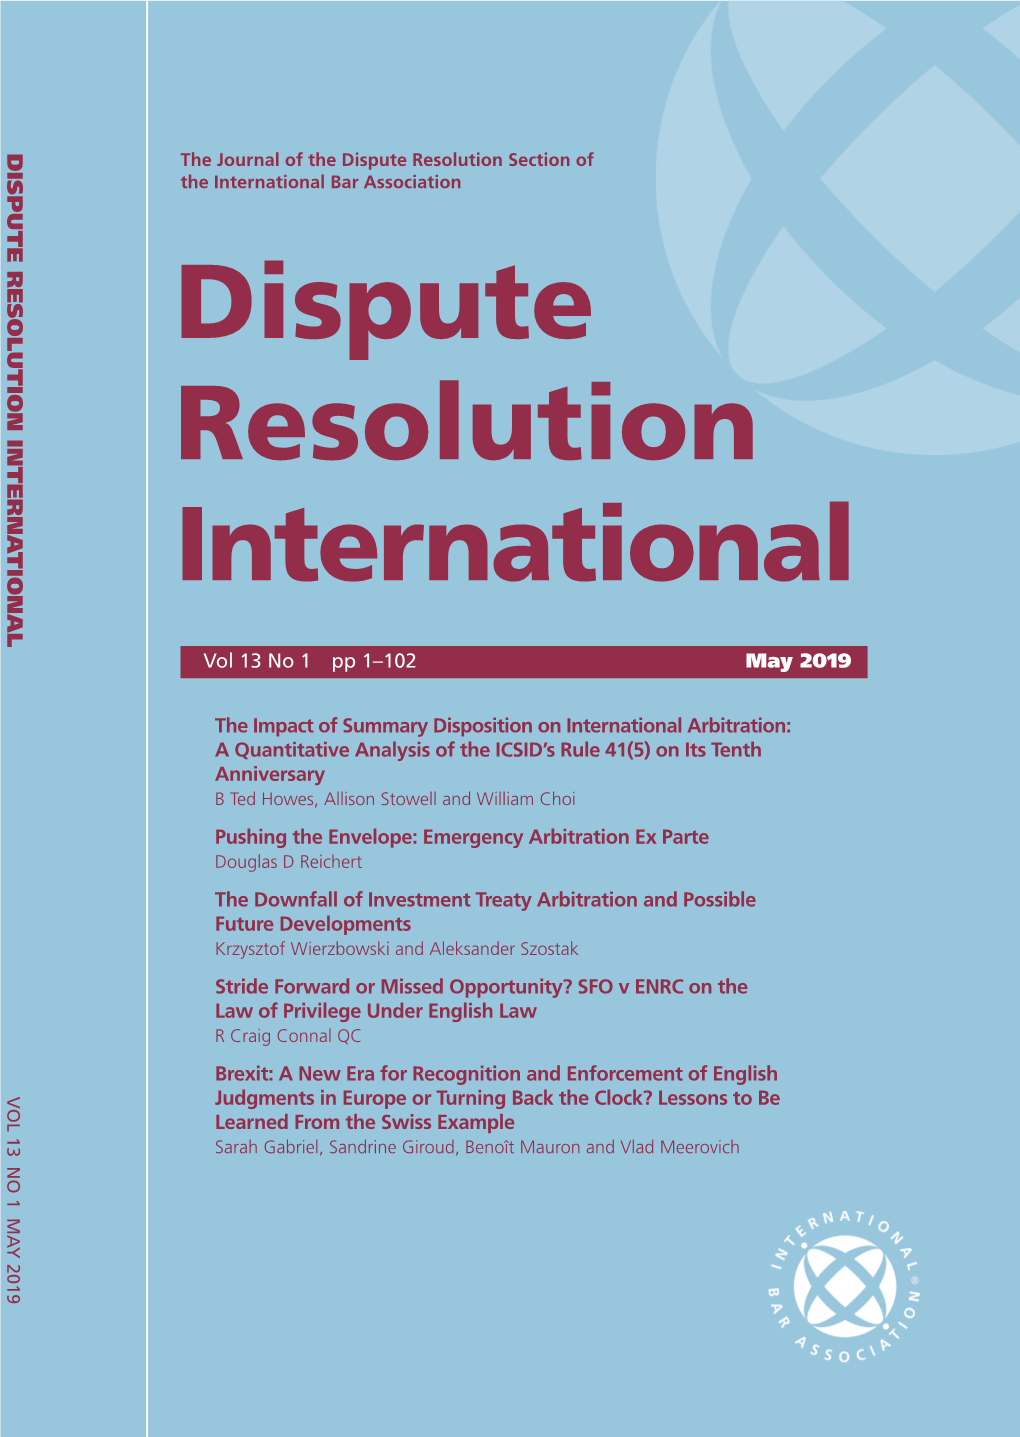 DISPUTE RESOLUTION INTERNATIONAL the Journal of the Dispute Resolution Section of the International Bar Association Dispute Resolution International